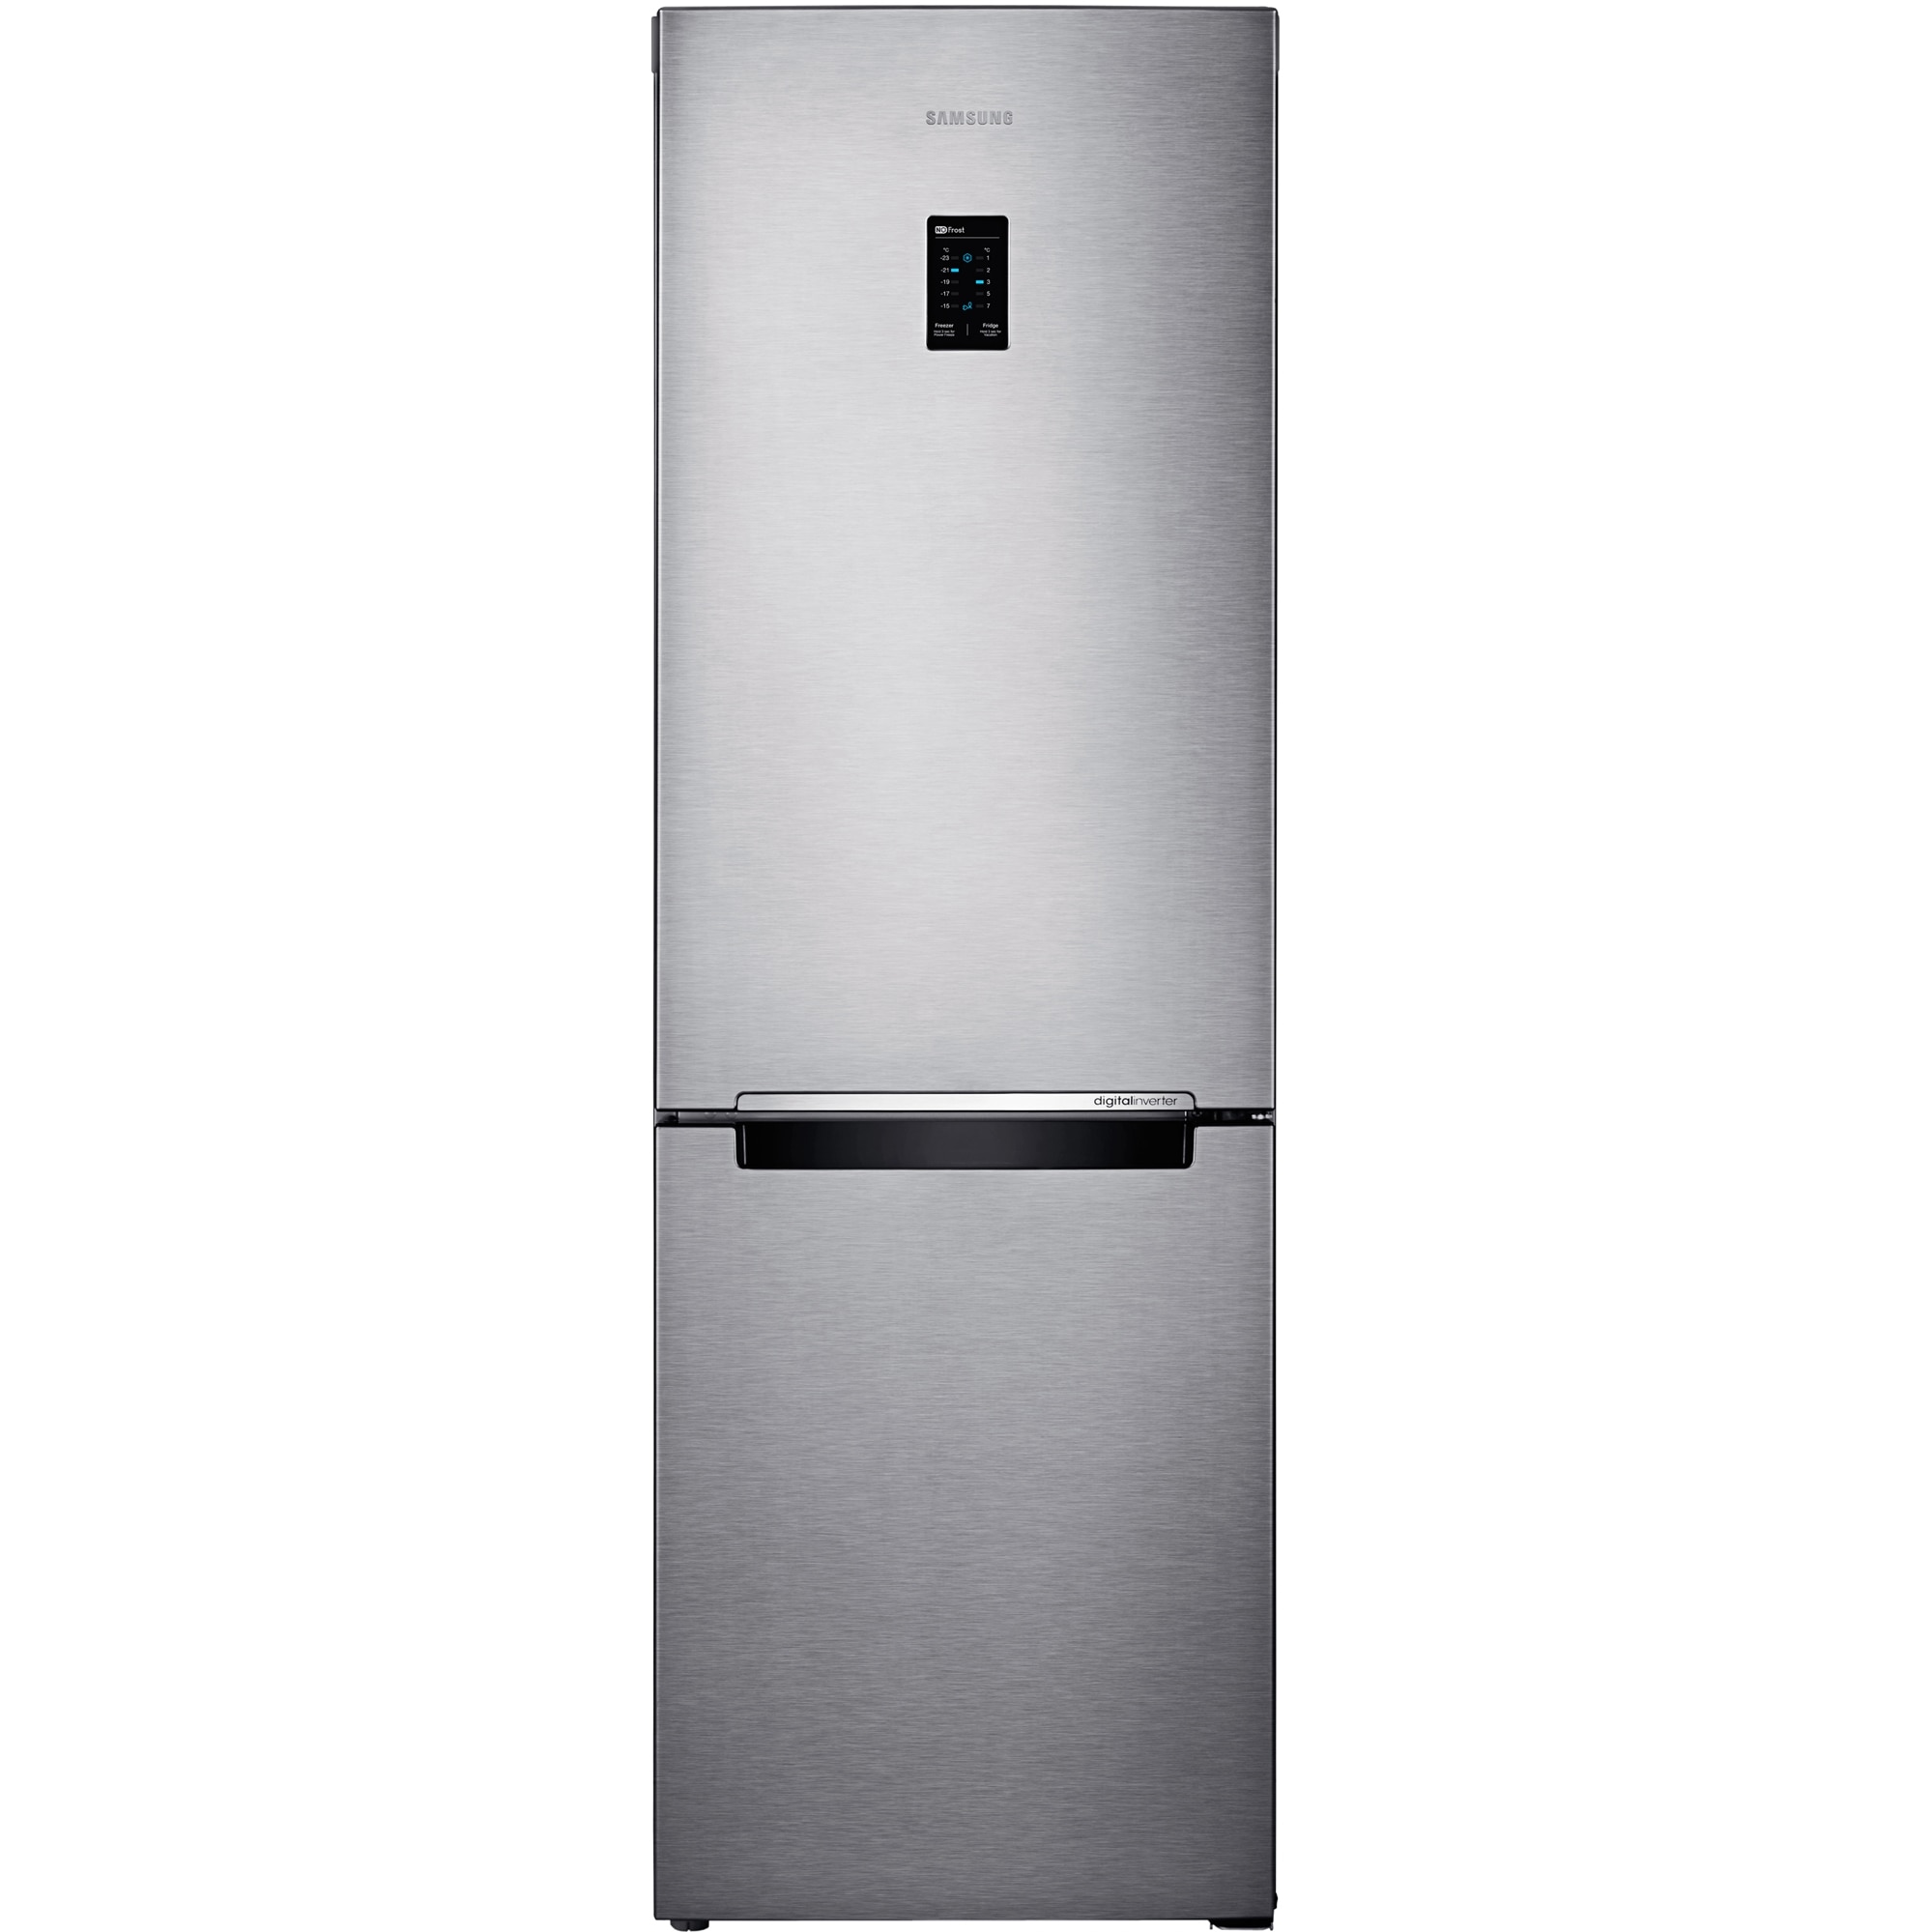 Хладилник Samsung RB31FERNDSA с обем от 310 л.